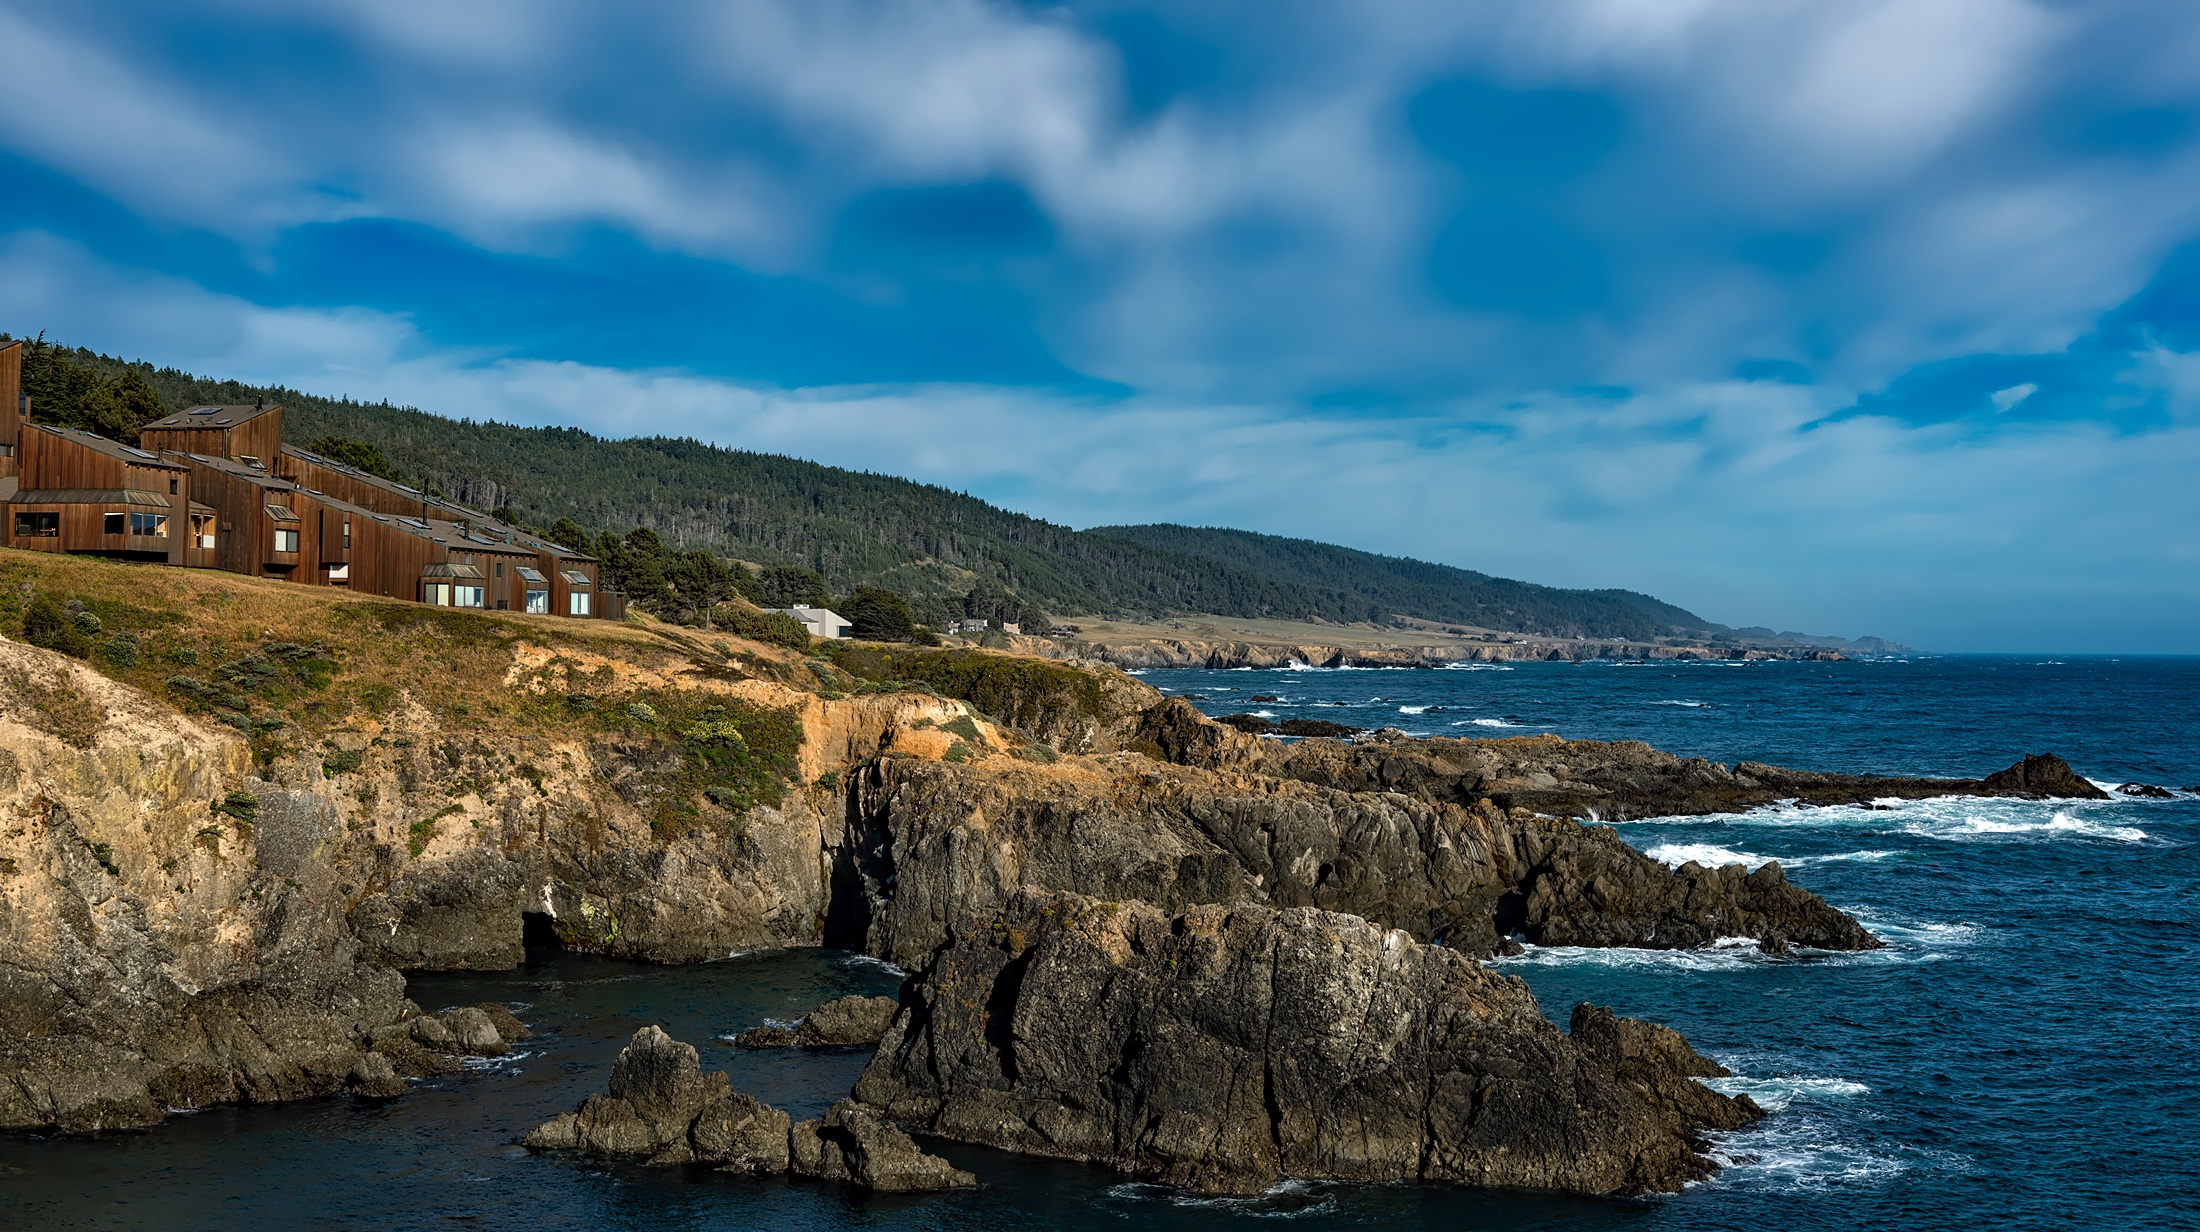 PCデスクトップに自然, 海洋, Hdr, カリフォルニア, 海岸線, 写真撮影, アメリカ合衆国, 海景画像を無料でダウンロード